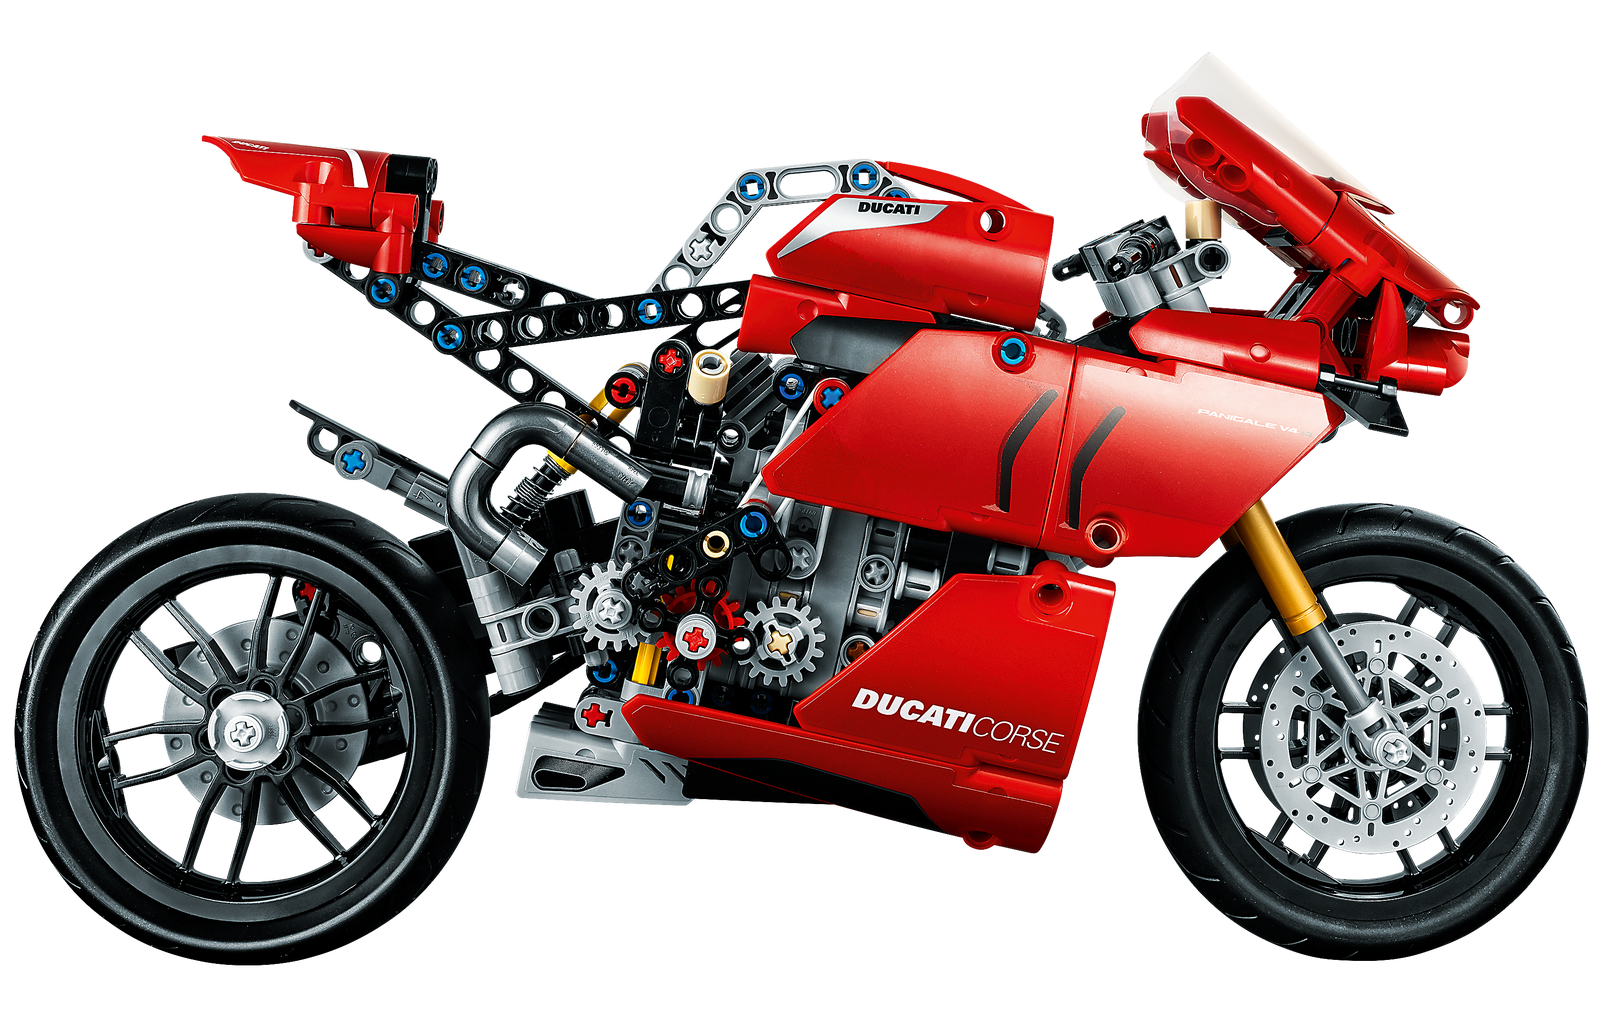 Lego Technic Ducati Panigale V4 R Technic 42107